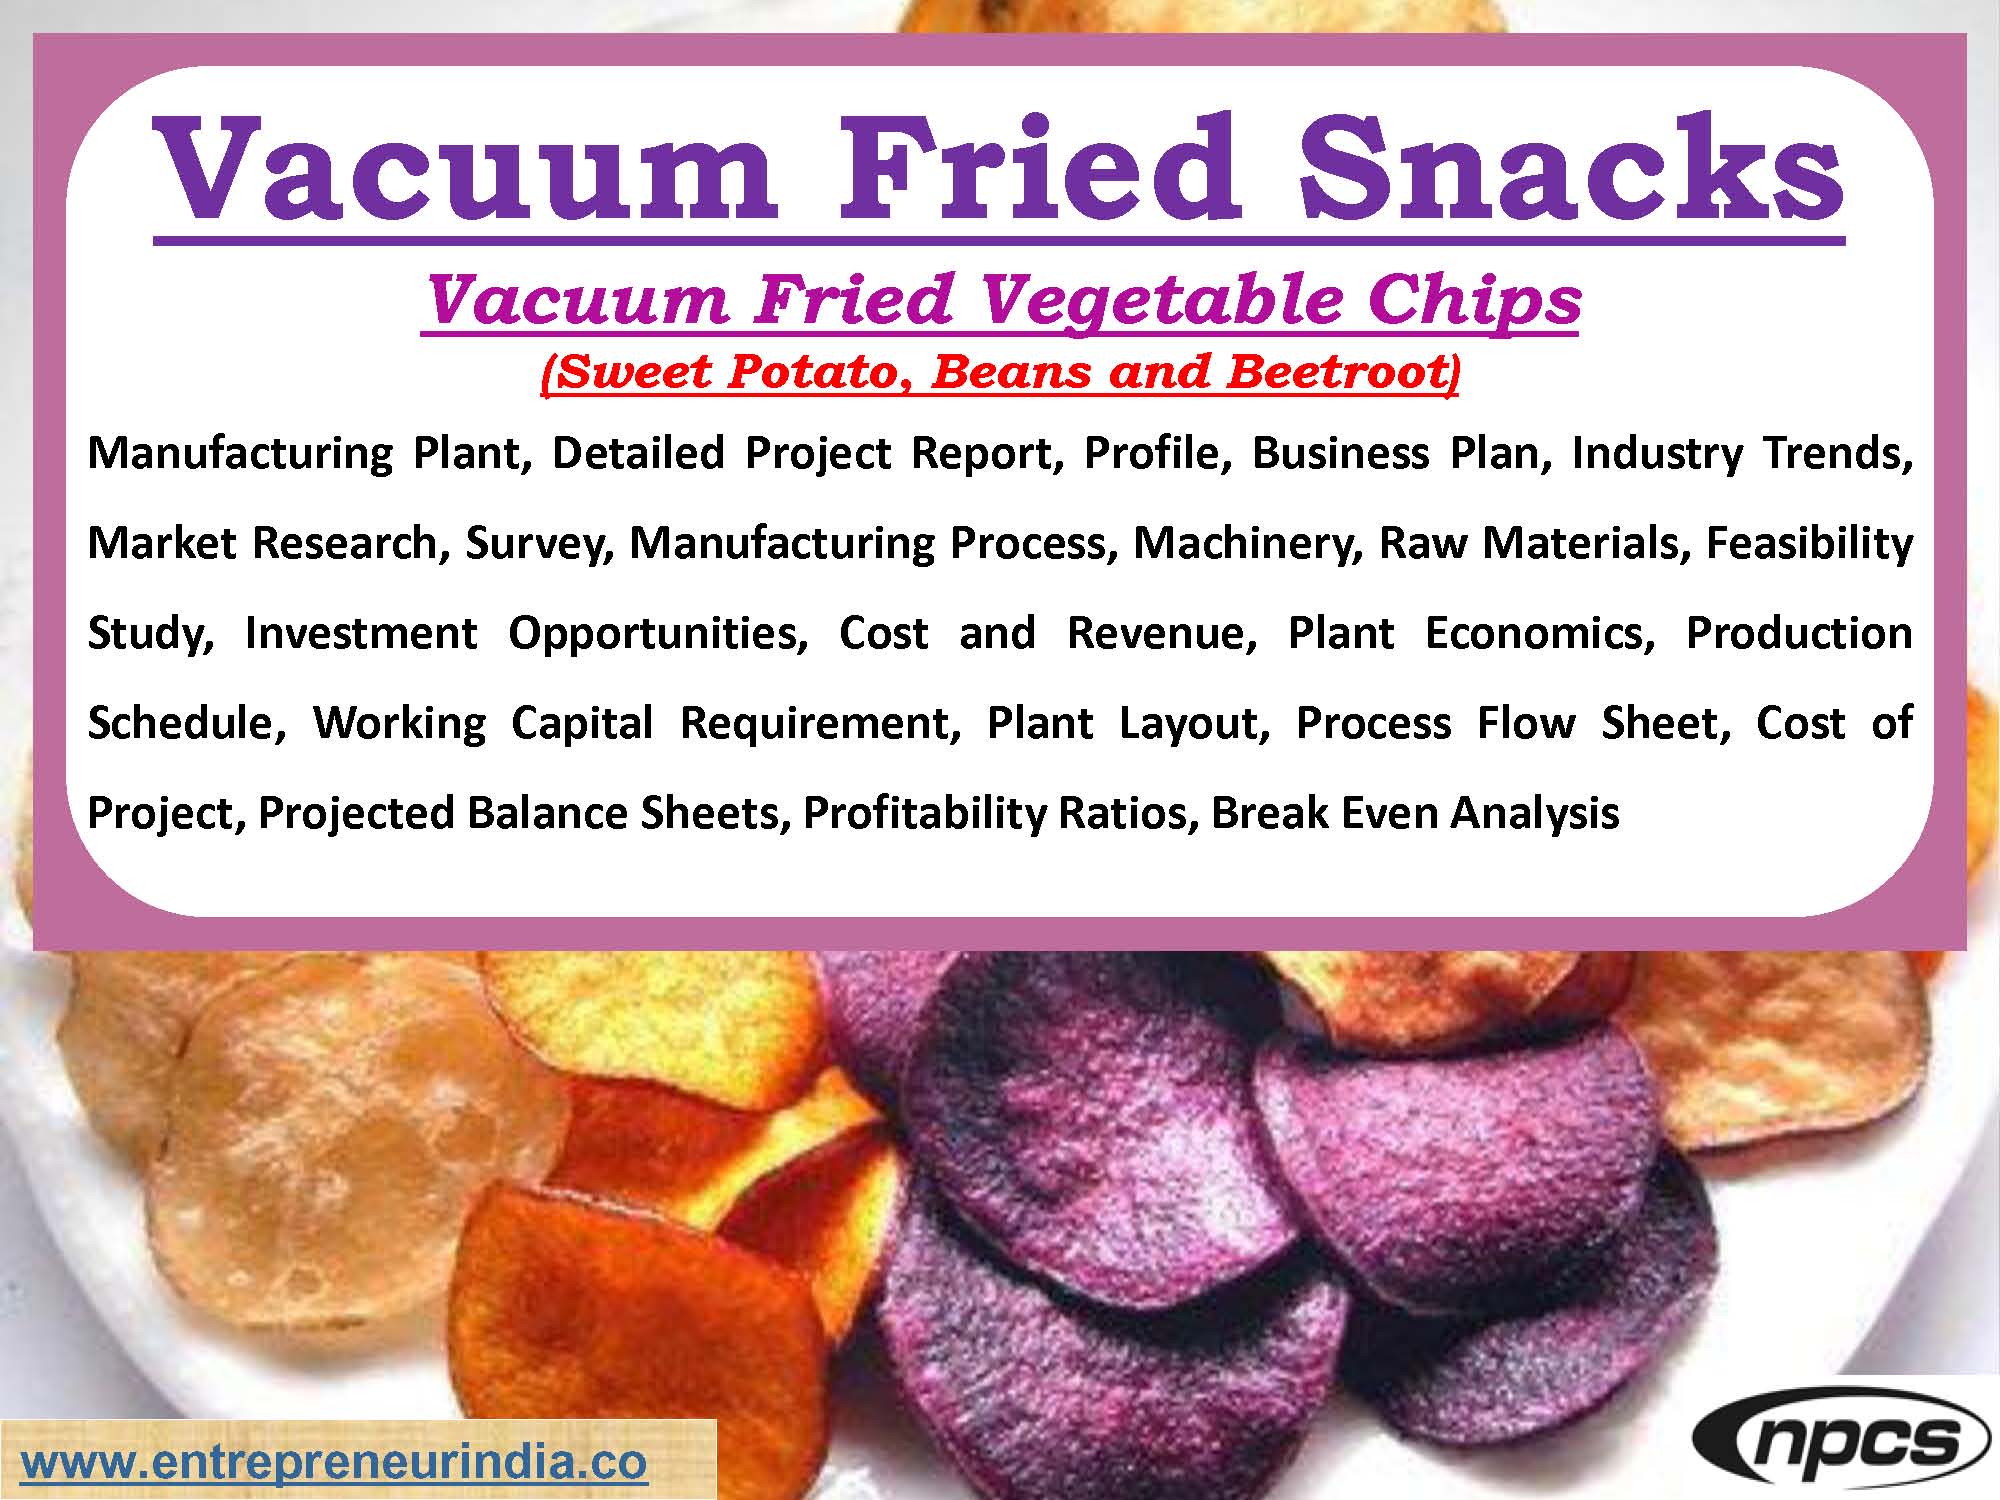 Vacuum Fried Snacks